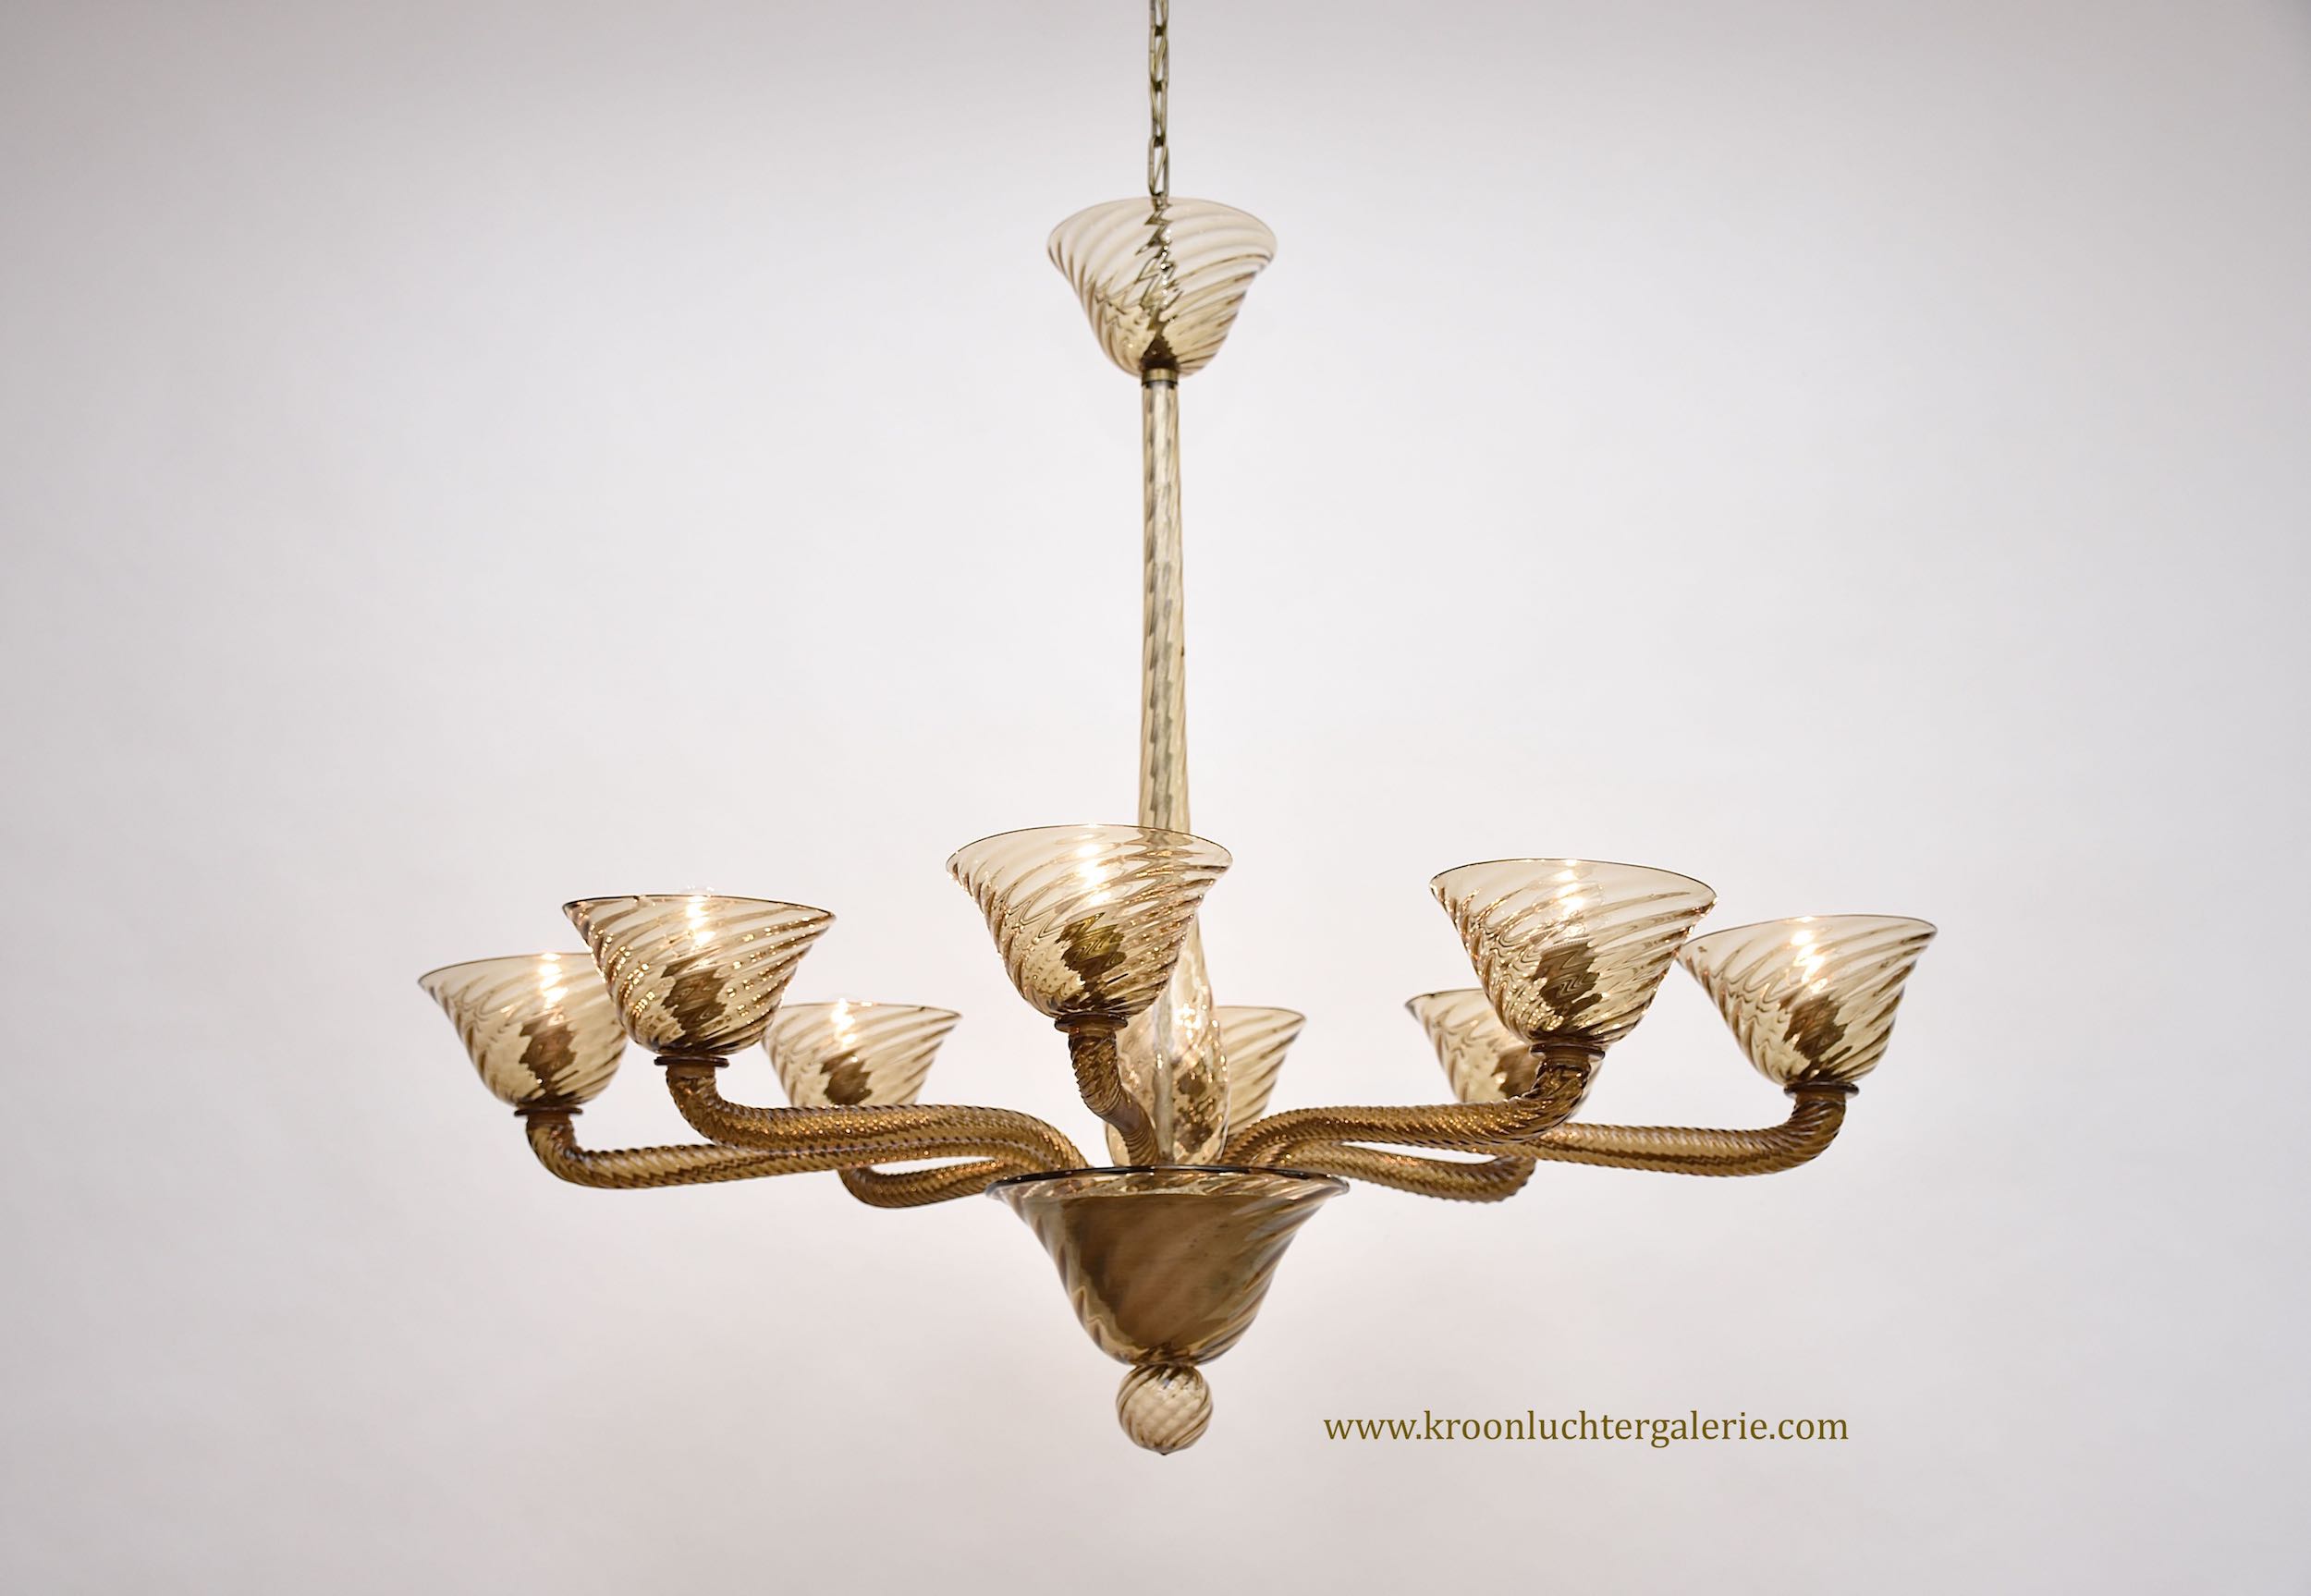 A rare Venetian oval shaped Murano chandelier